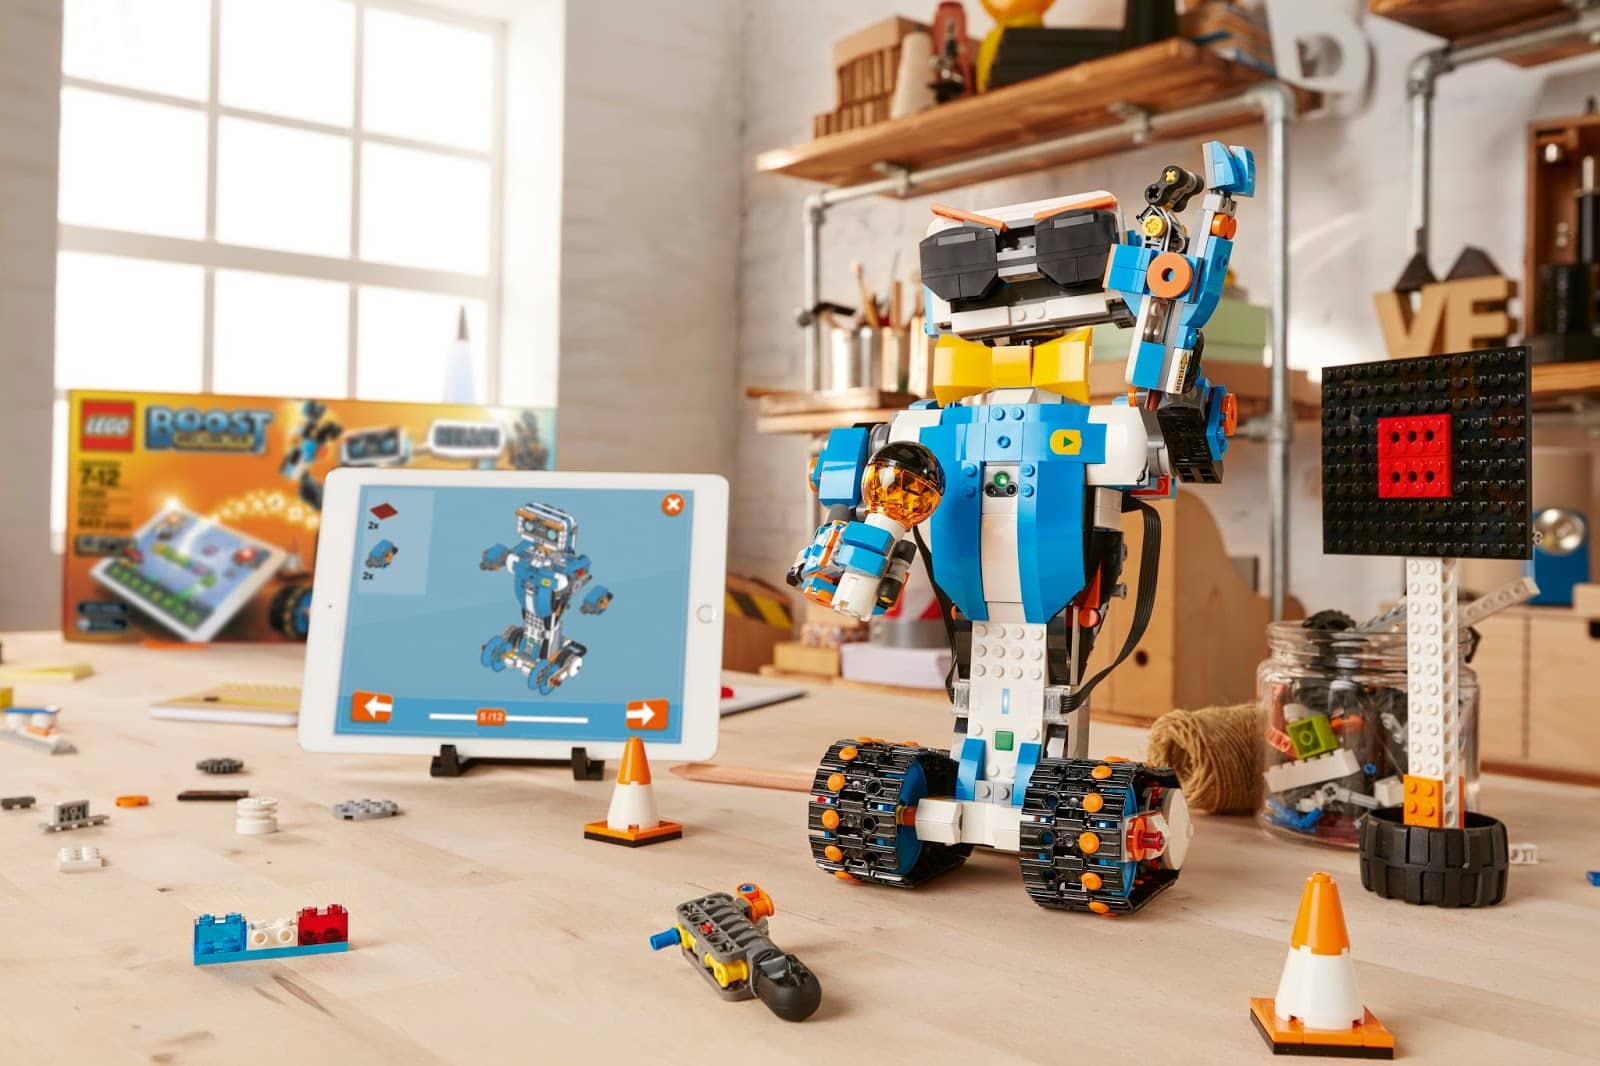 Juguetes educativos para niños - TOP10 de juguetes STEM más populares Toys4brain – Juguetes STEM